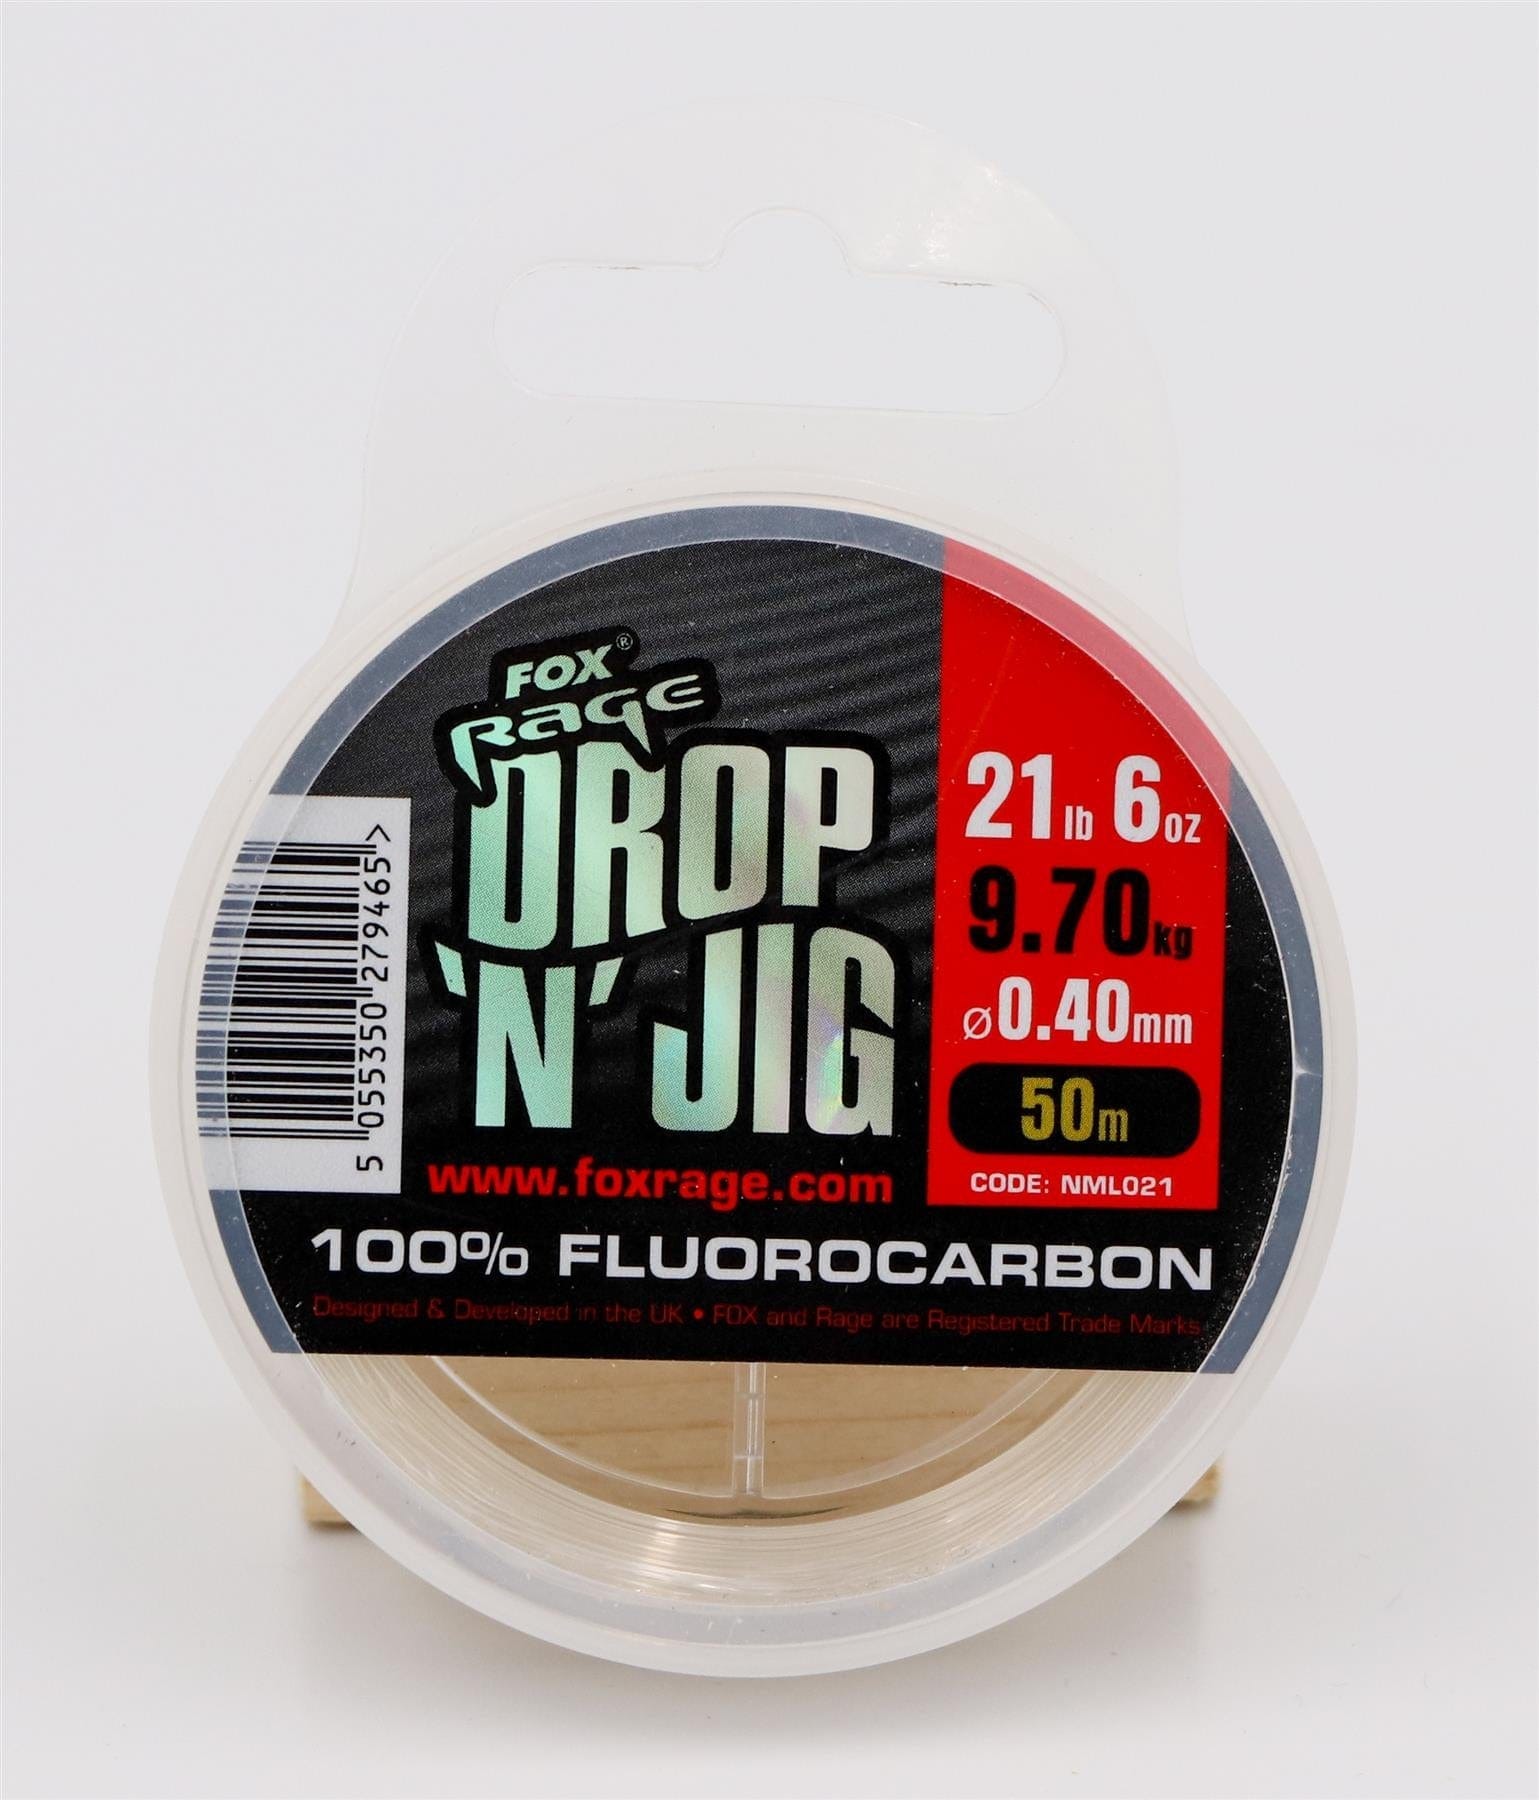 FOX Rage Drop 'N' Jig Fluorocarbon - 0.40mm 9.70kg / 21.38lb.